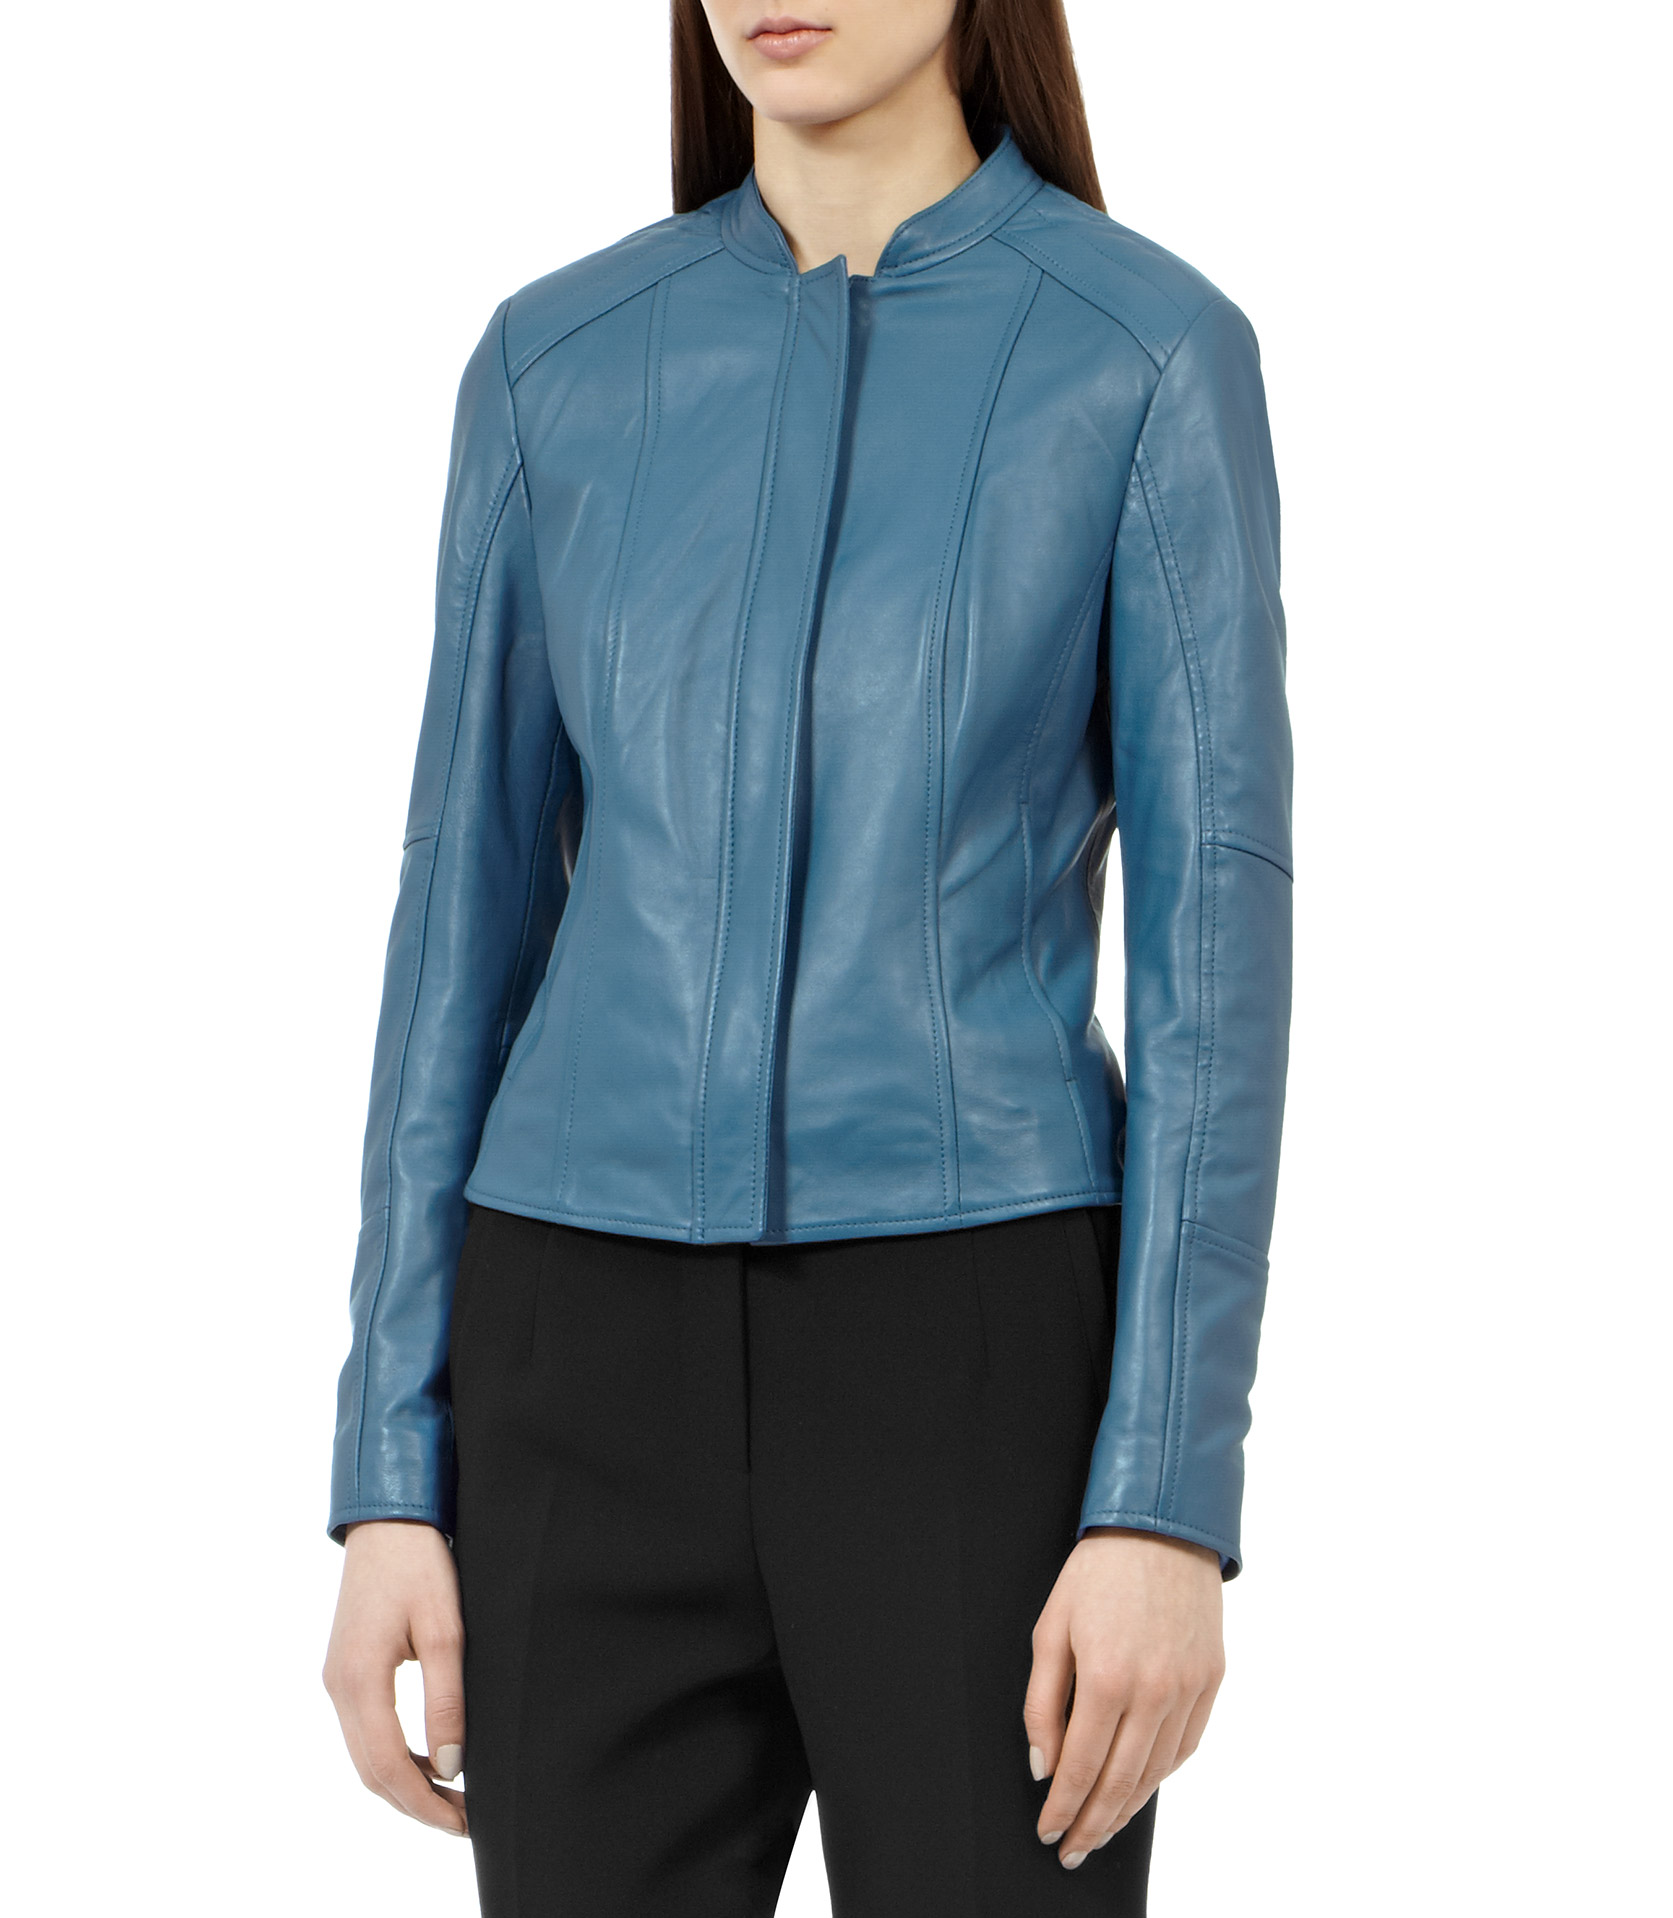 Lyst - Reiss Soho Fitted Leather Jacket Cornflower Blue in Blue